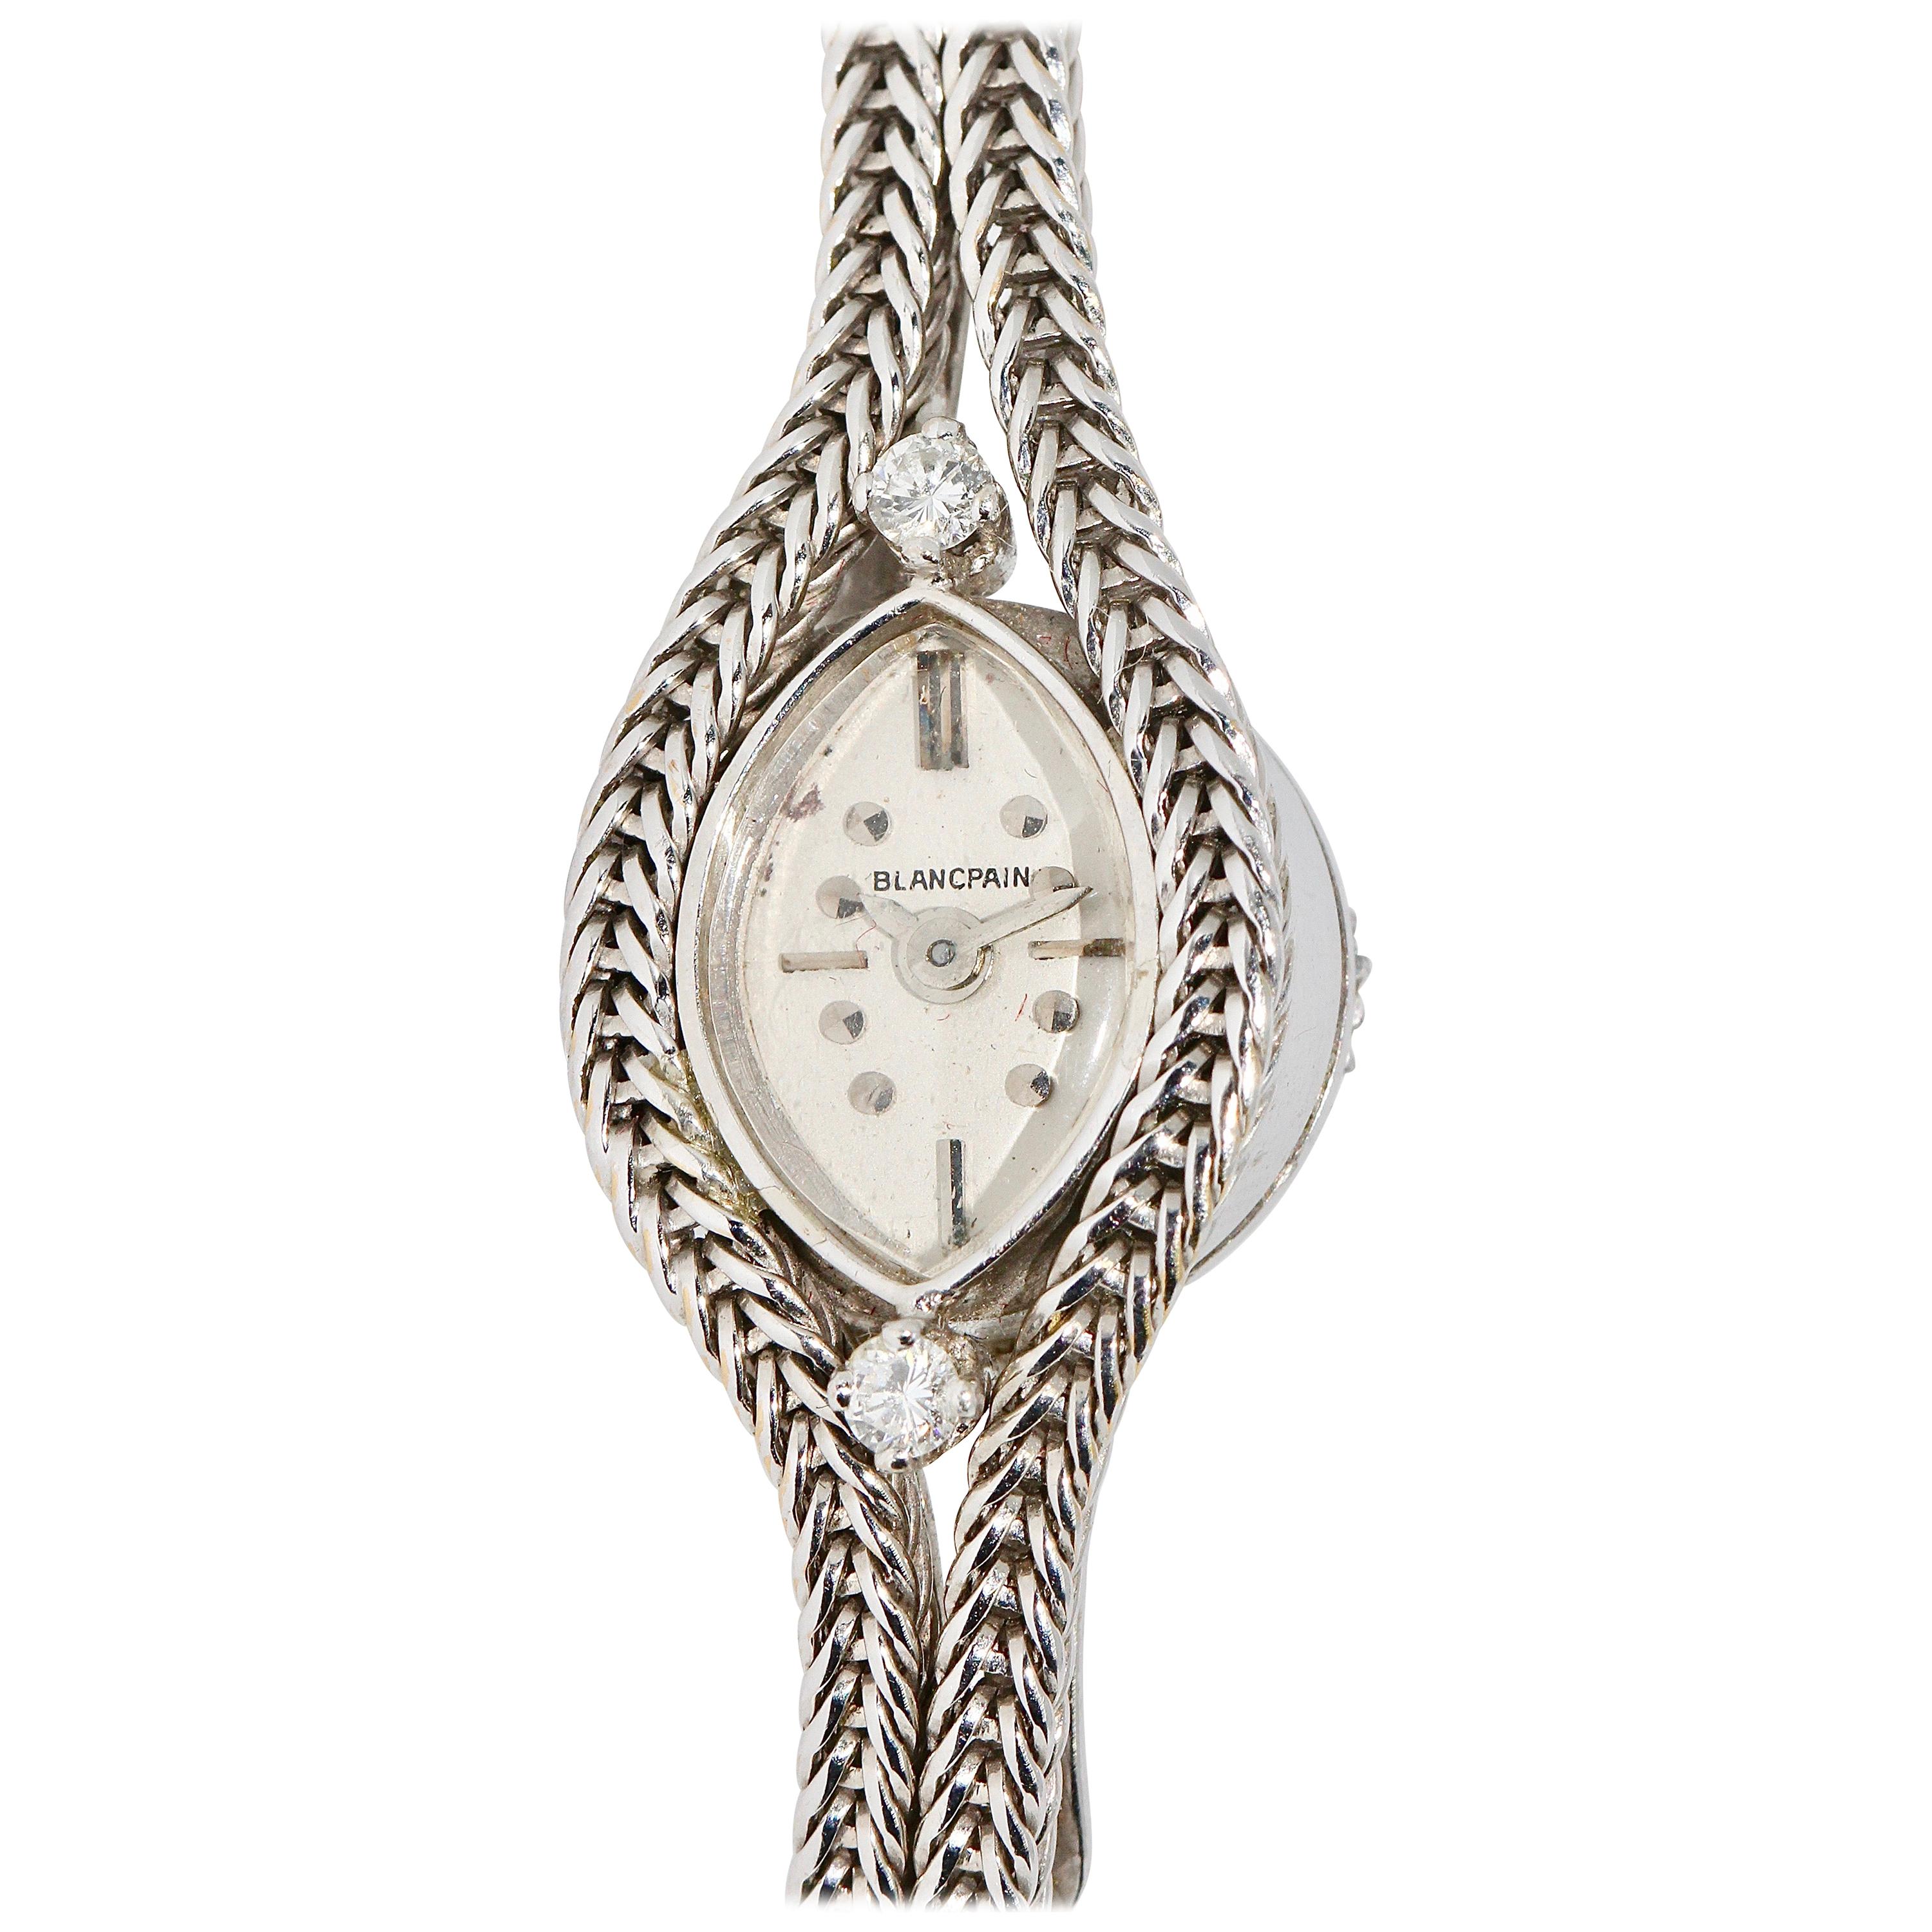 Ladies Wristwatch by Blancpain, 18 Karat White Gold with Diamonds